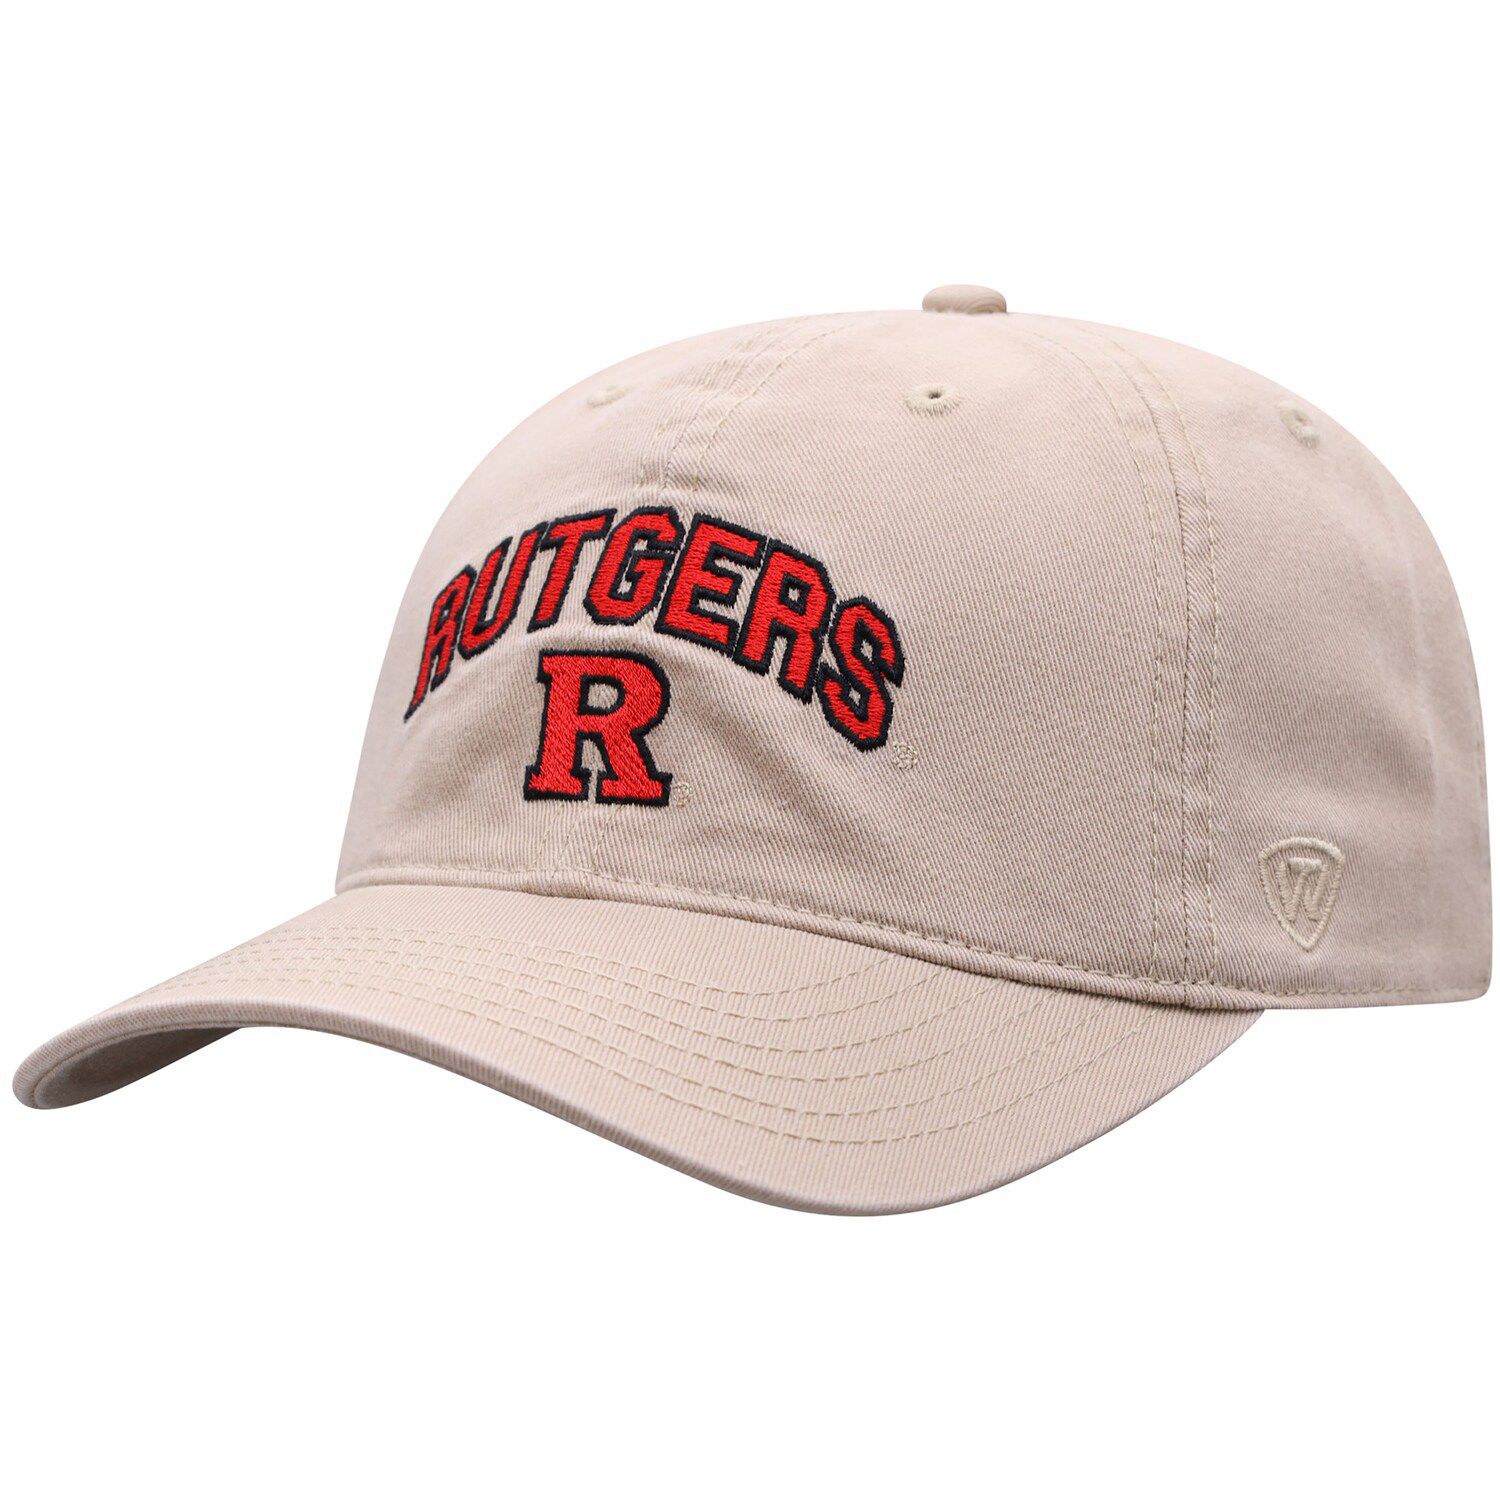 Rutgers Scarlet Knights baseball cap